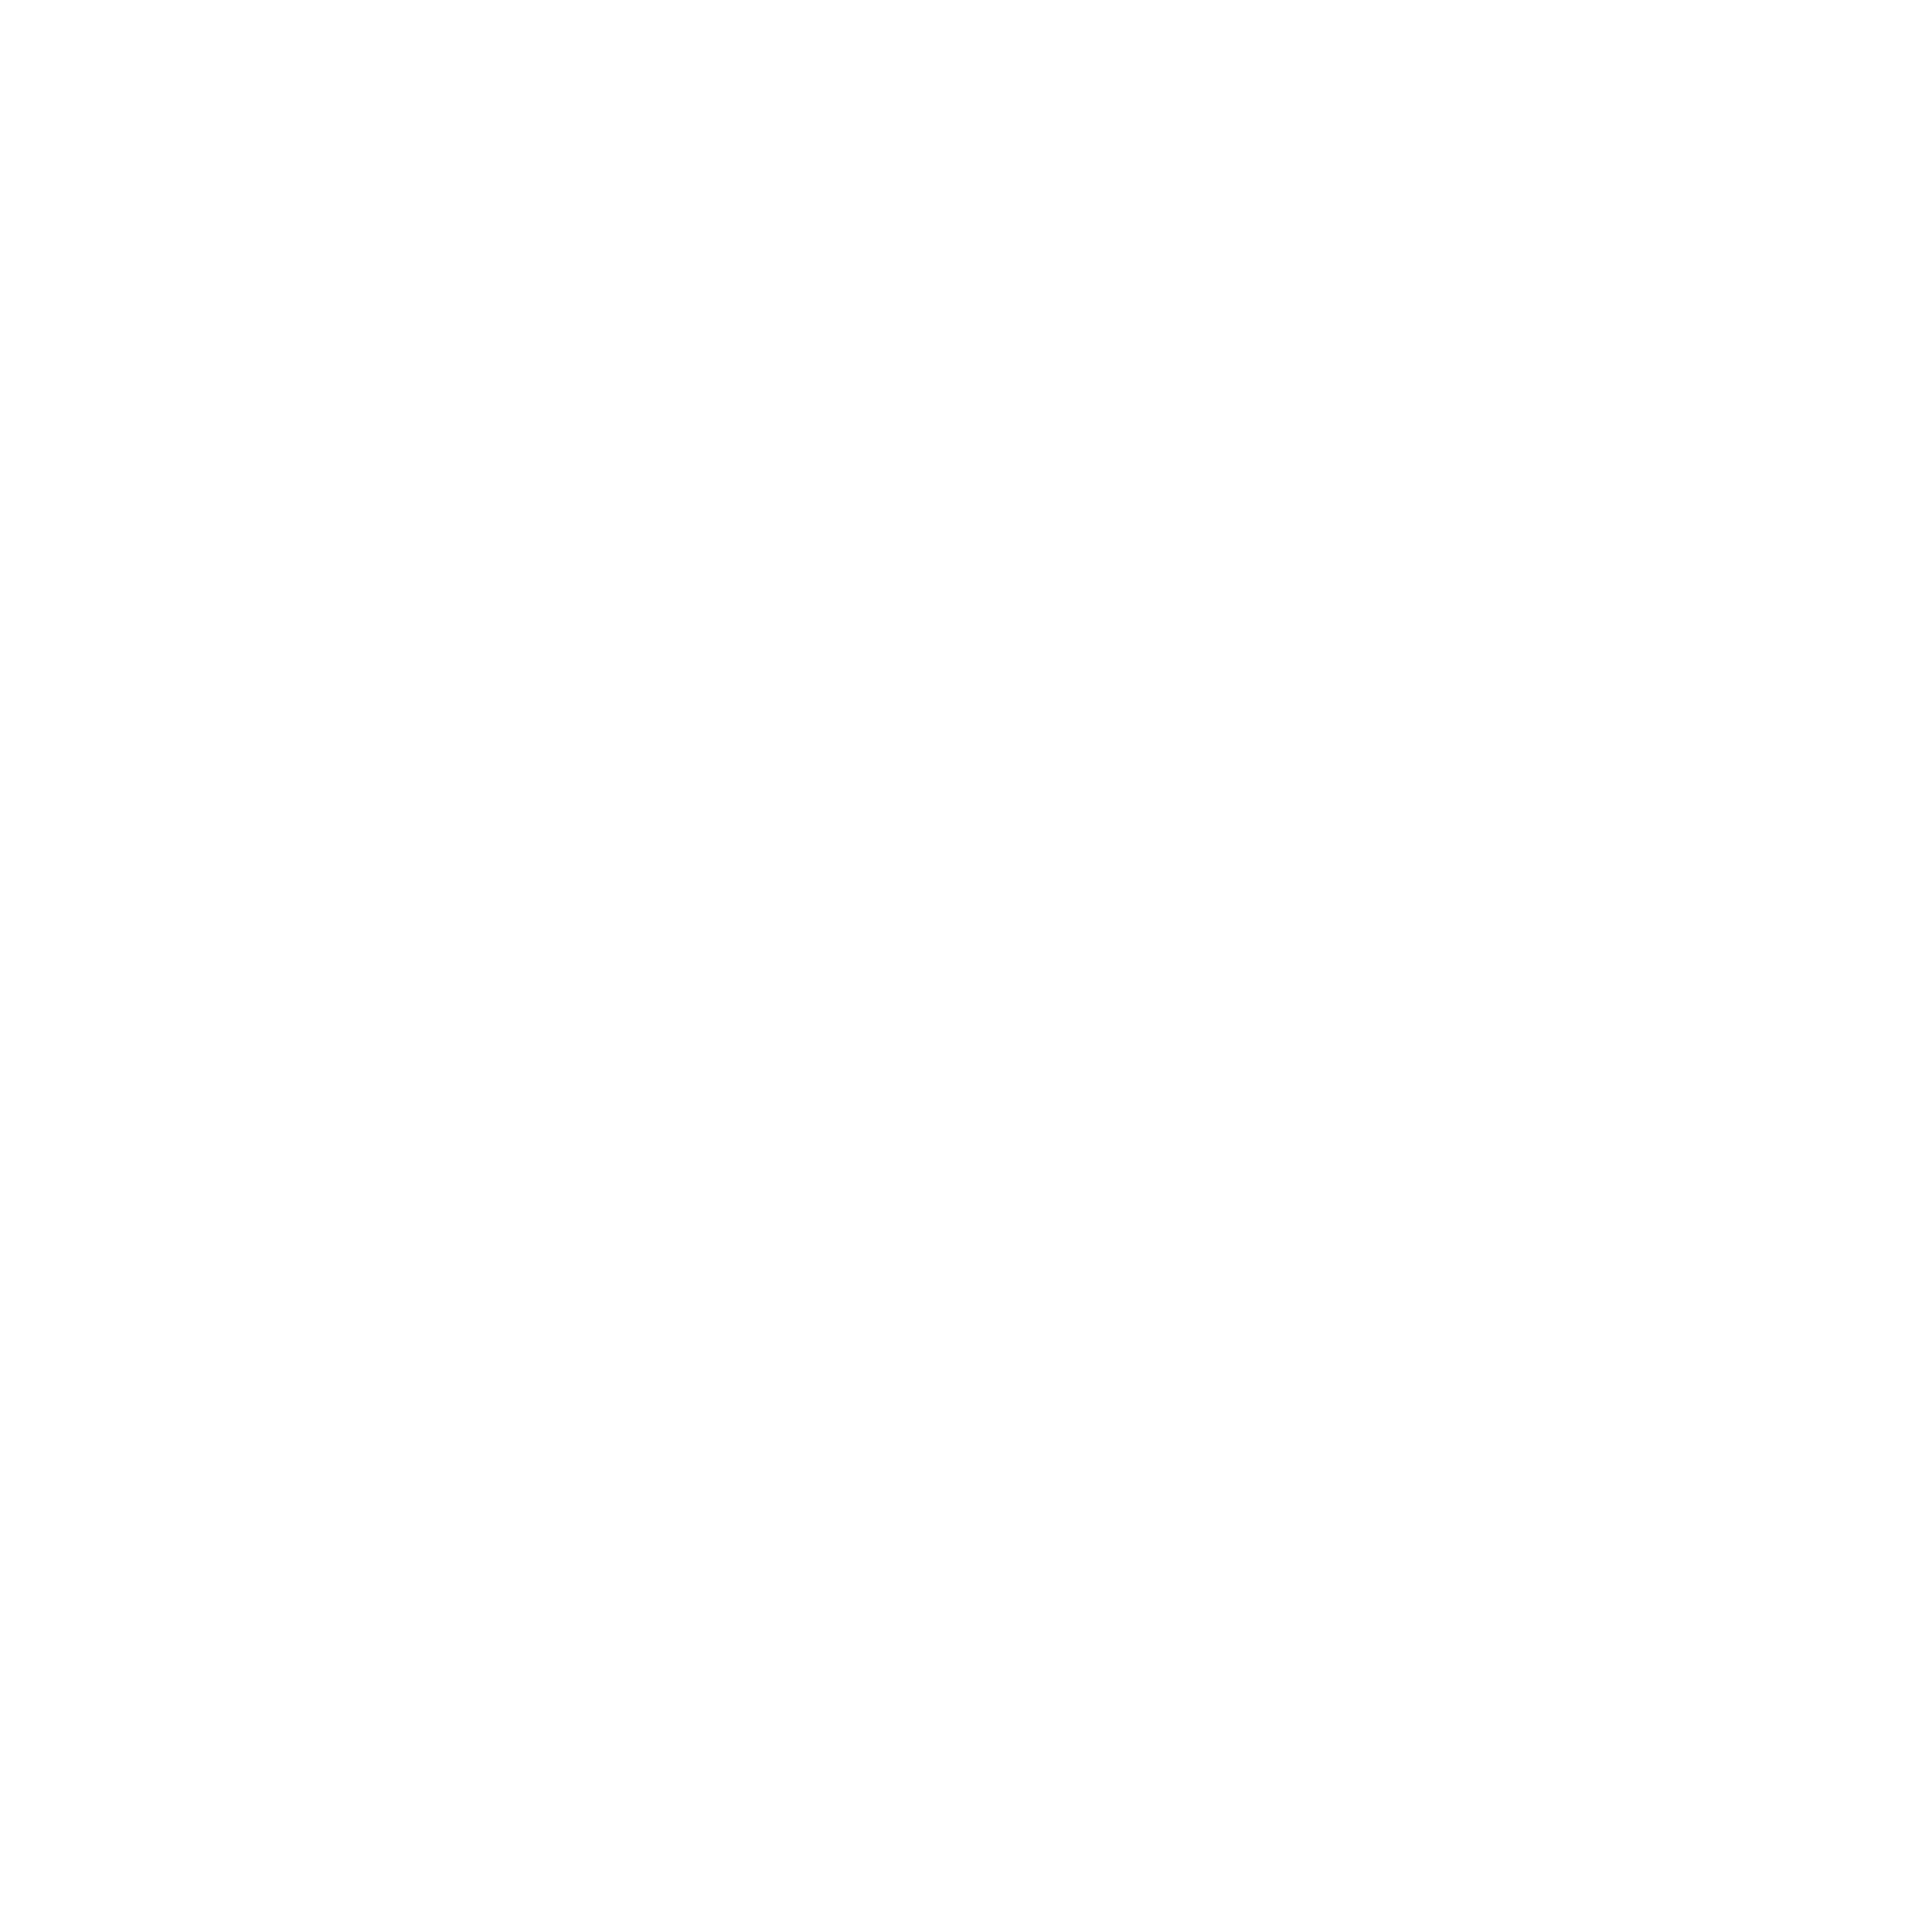 Corporate Competitor Podcast